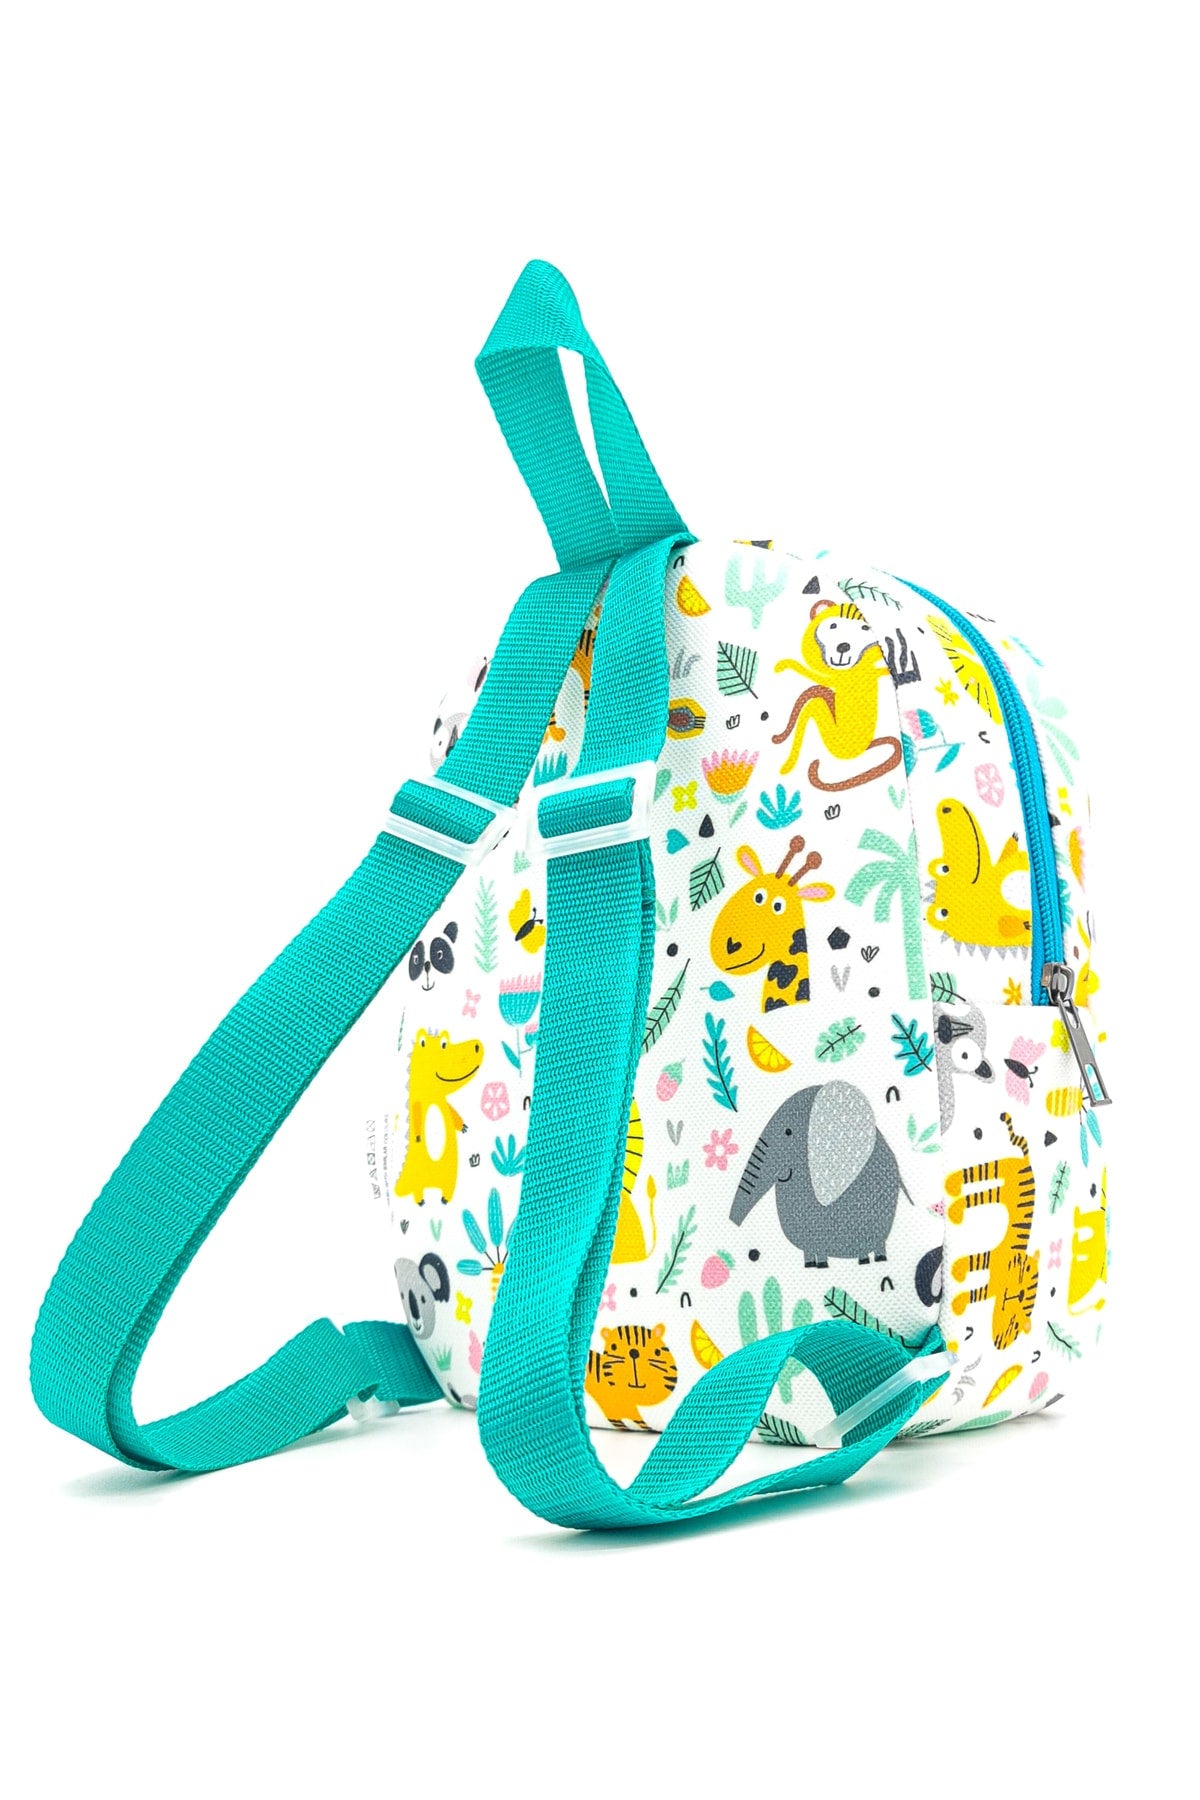 [ We Write Any Name You Want ] Mini Animals 0-8 Years Old Child Backpack, Kindergarten-Nursery Bag